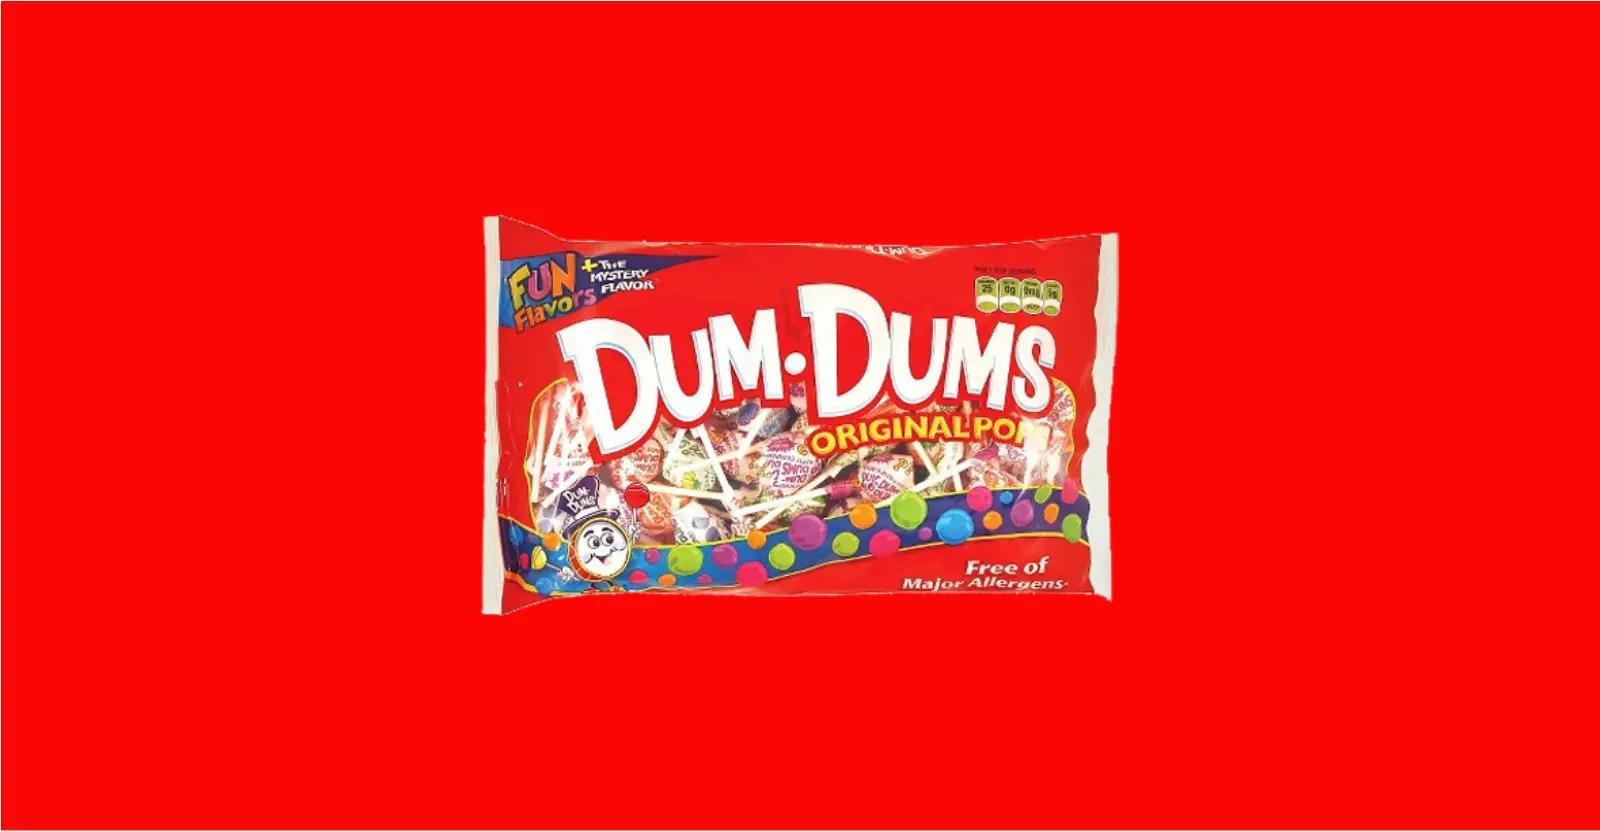 are dum dums gluten-free